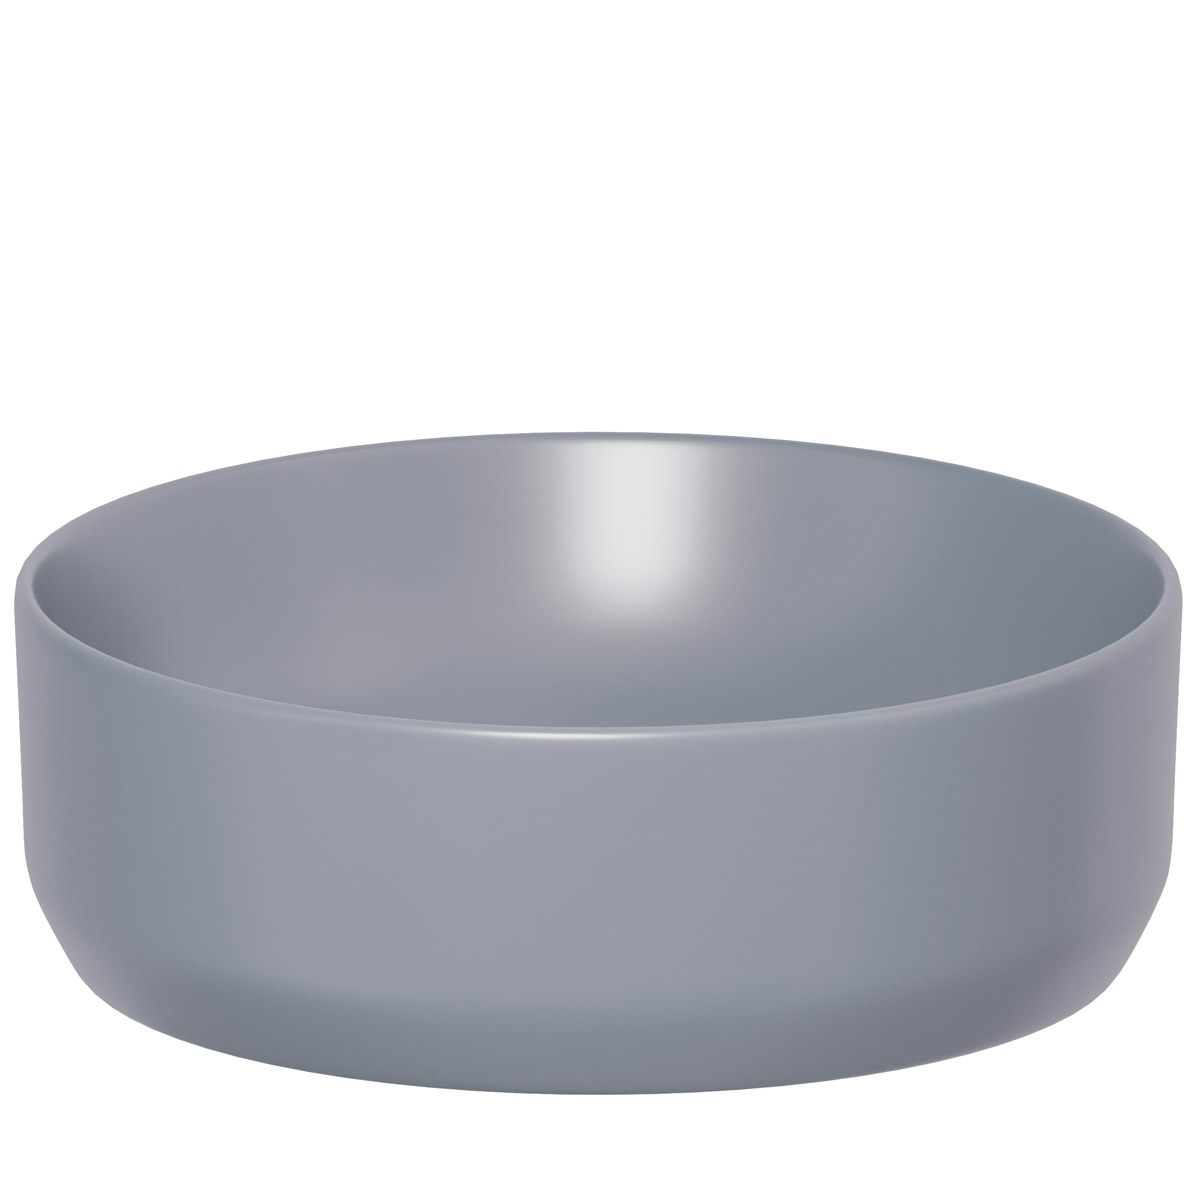 Mode Orion lilac grey coloured countertop basin 355mm